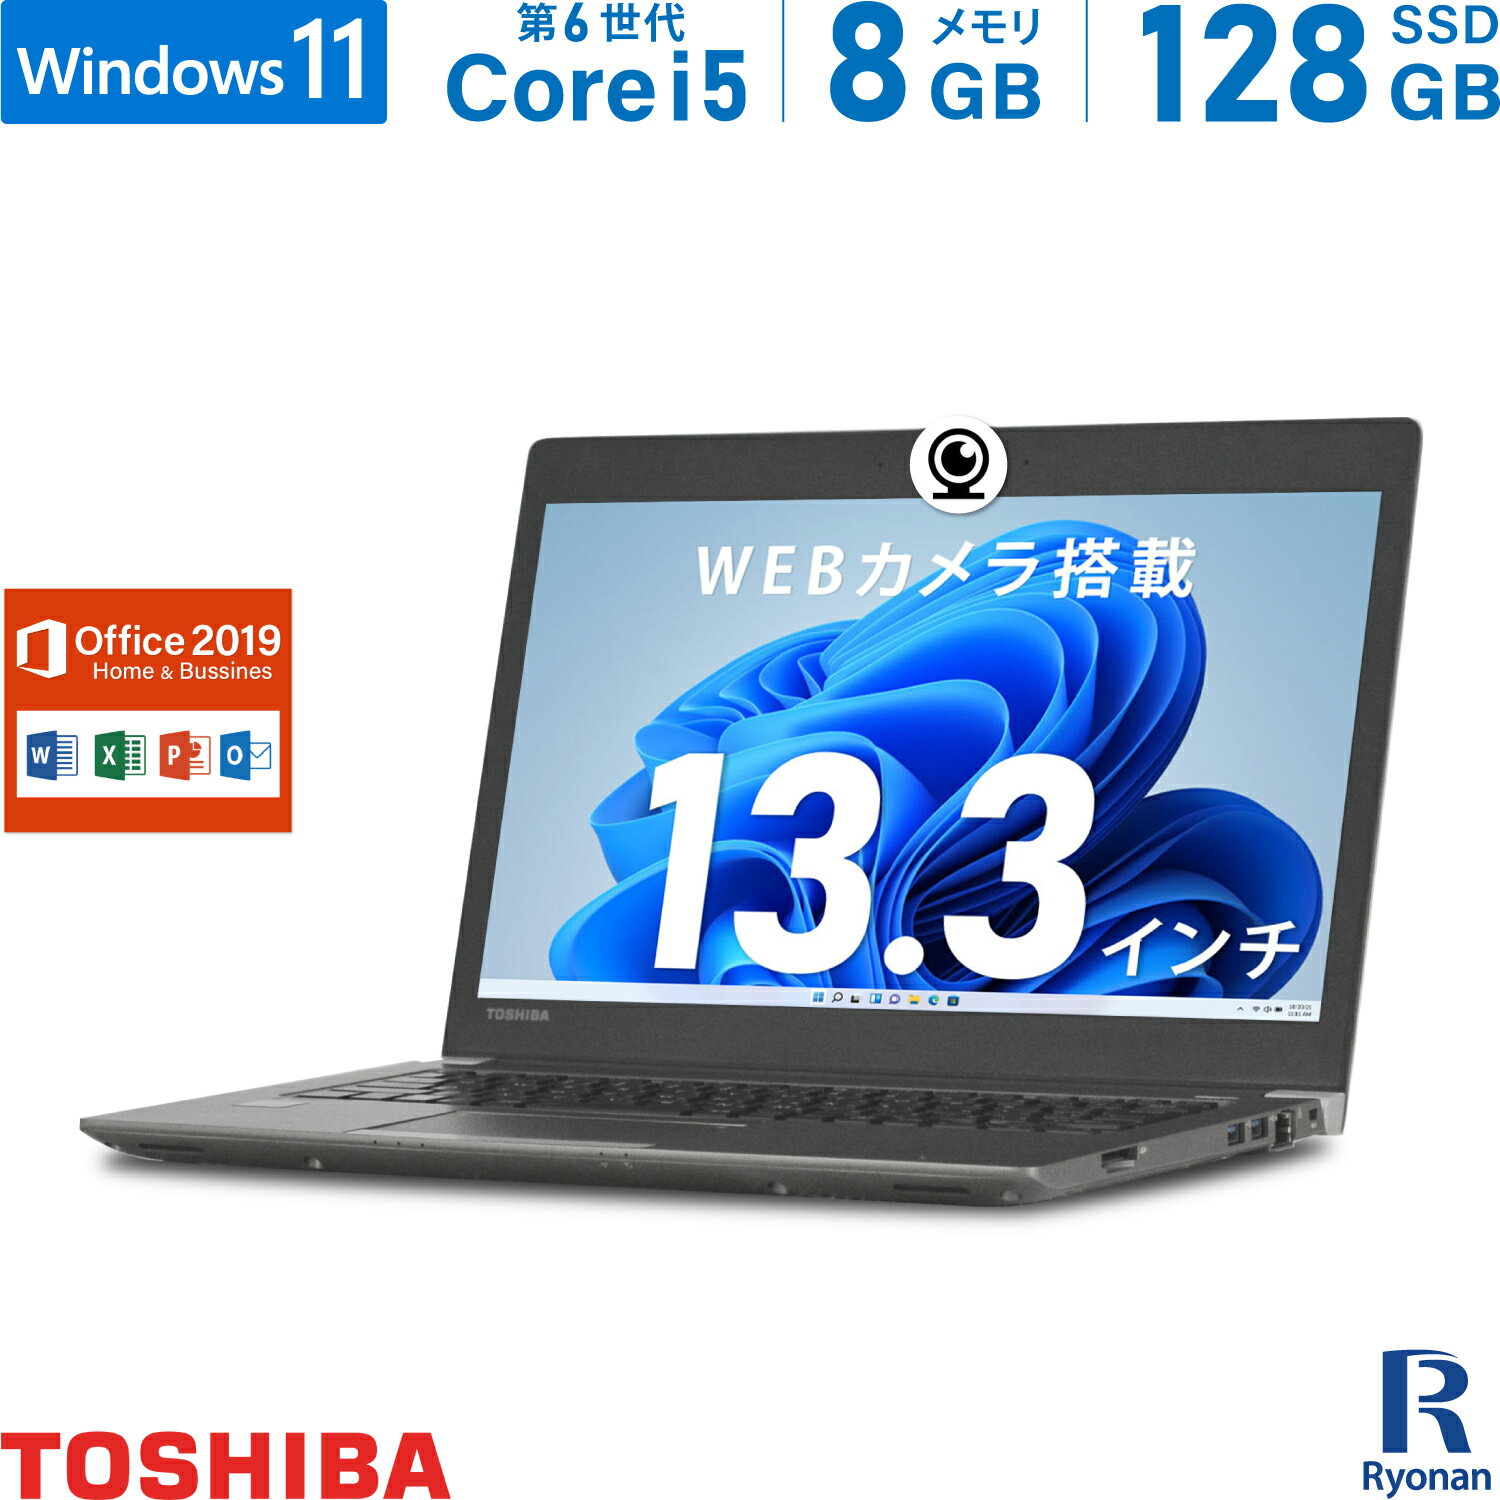 【10%OFFクーポン配布中】東芝 TOSHIBA Dynabook R63 第6世代 Core i5 メモリ:8GB M.2 SSD:128GB ノートパソコン Microsoft Office 2019搭載 13.3インチ 無線LAN HDMI SDカードスロット 中古パソコン ノートPC Windows 11 搭載 Windows 10 Office2019 WEBカメラ